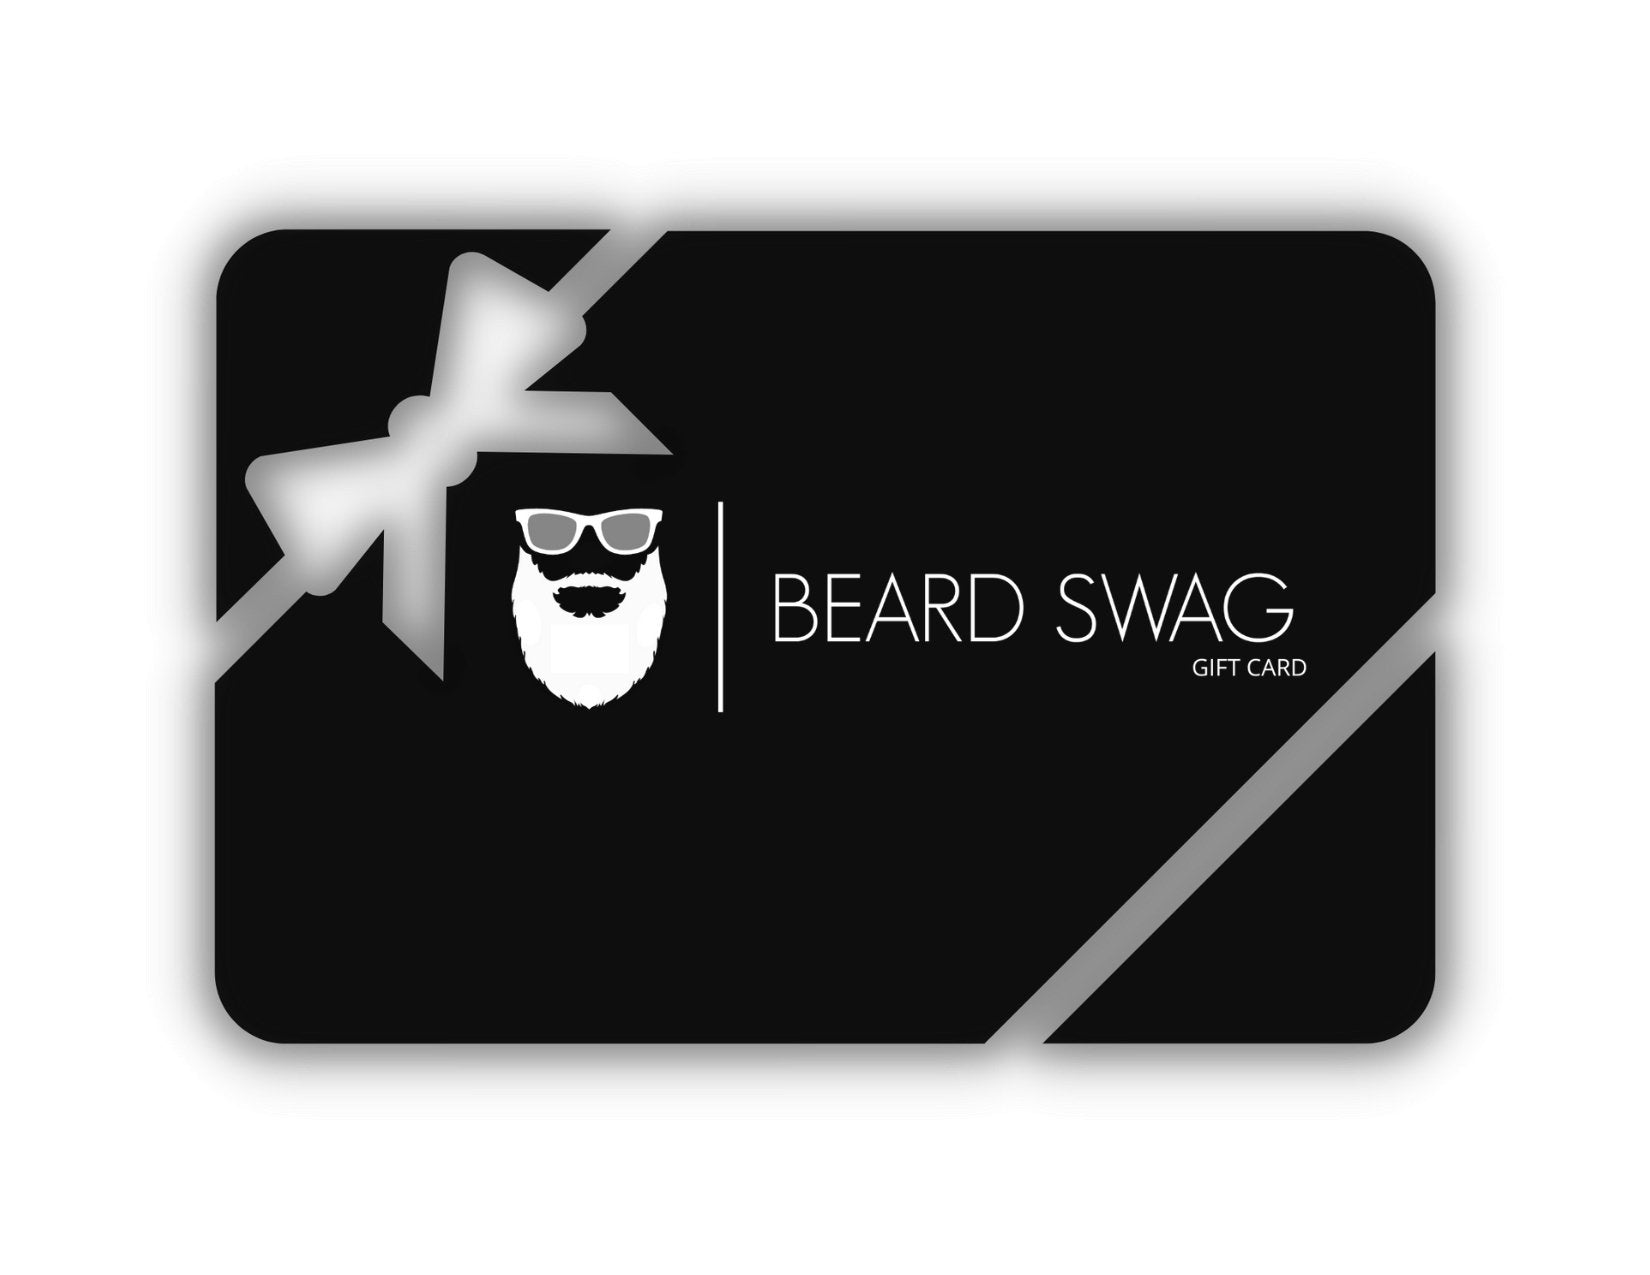 Beard Swag Gift Card - Beard Swag